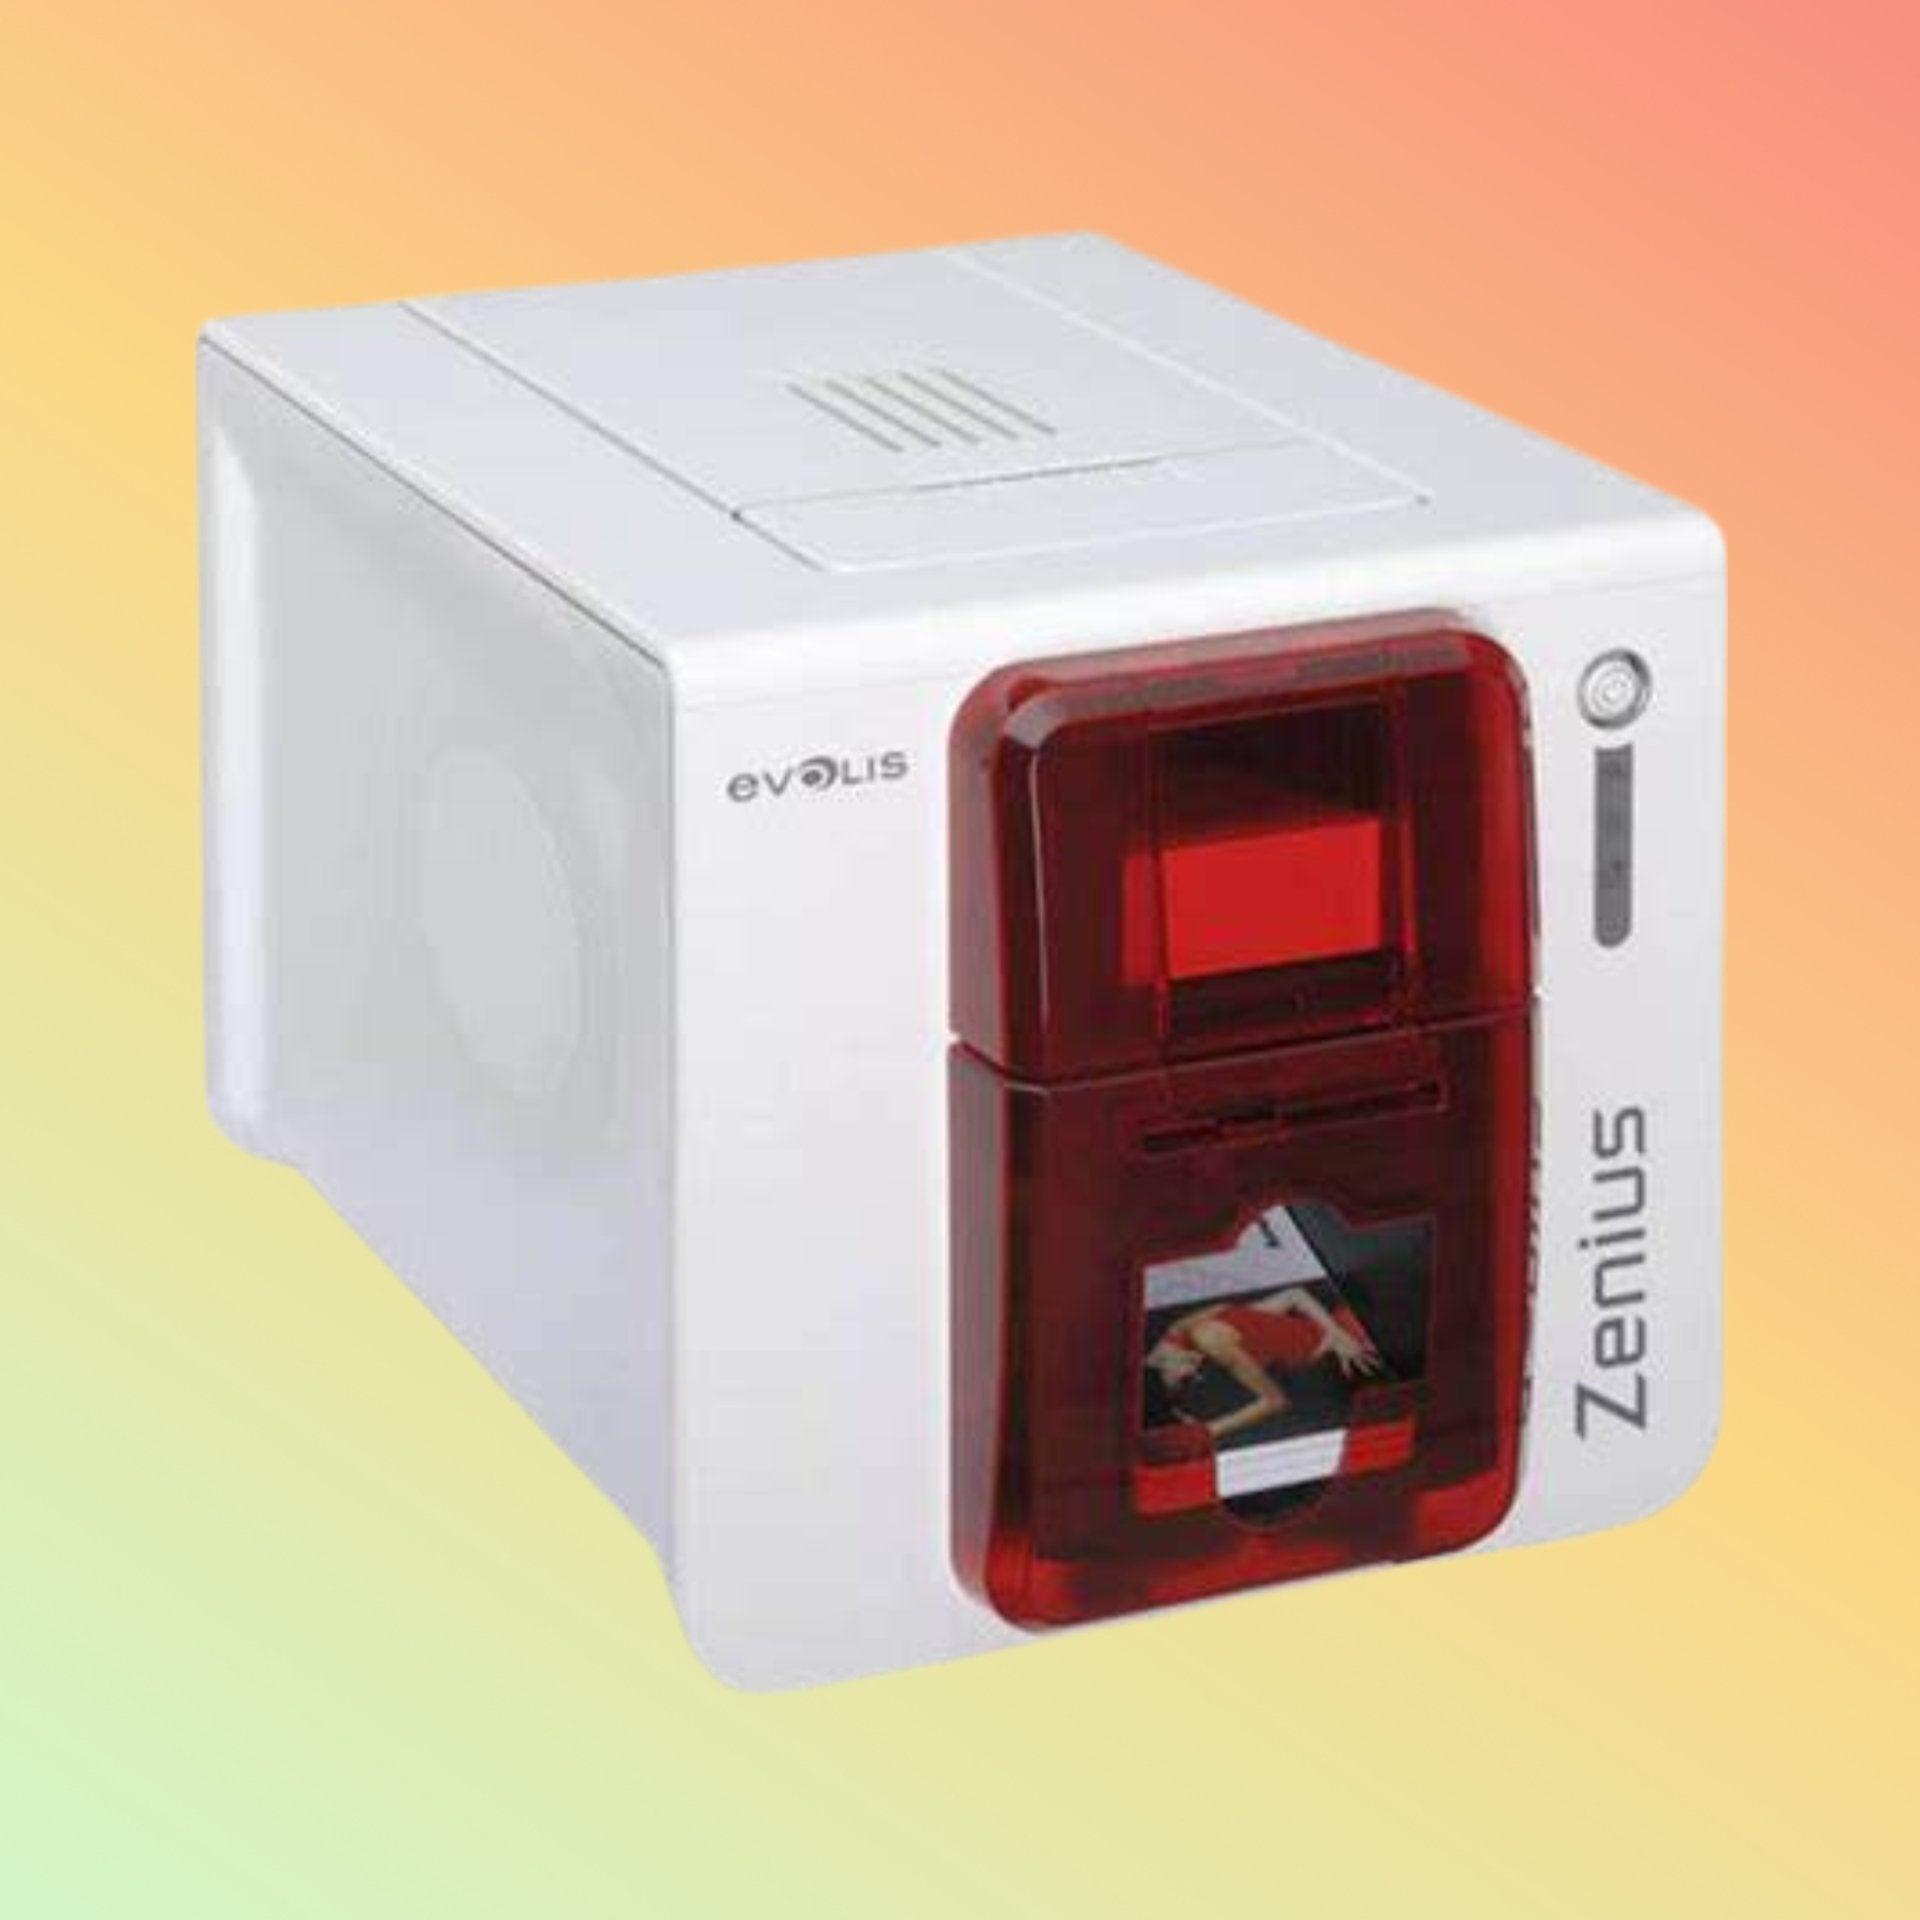 Idcard Printer - Evolis Primacy Dual IDCard Printer - Neotech